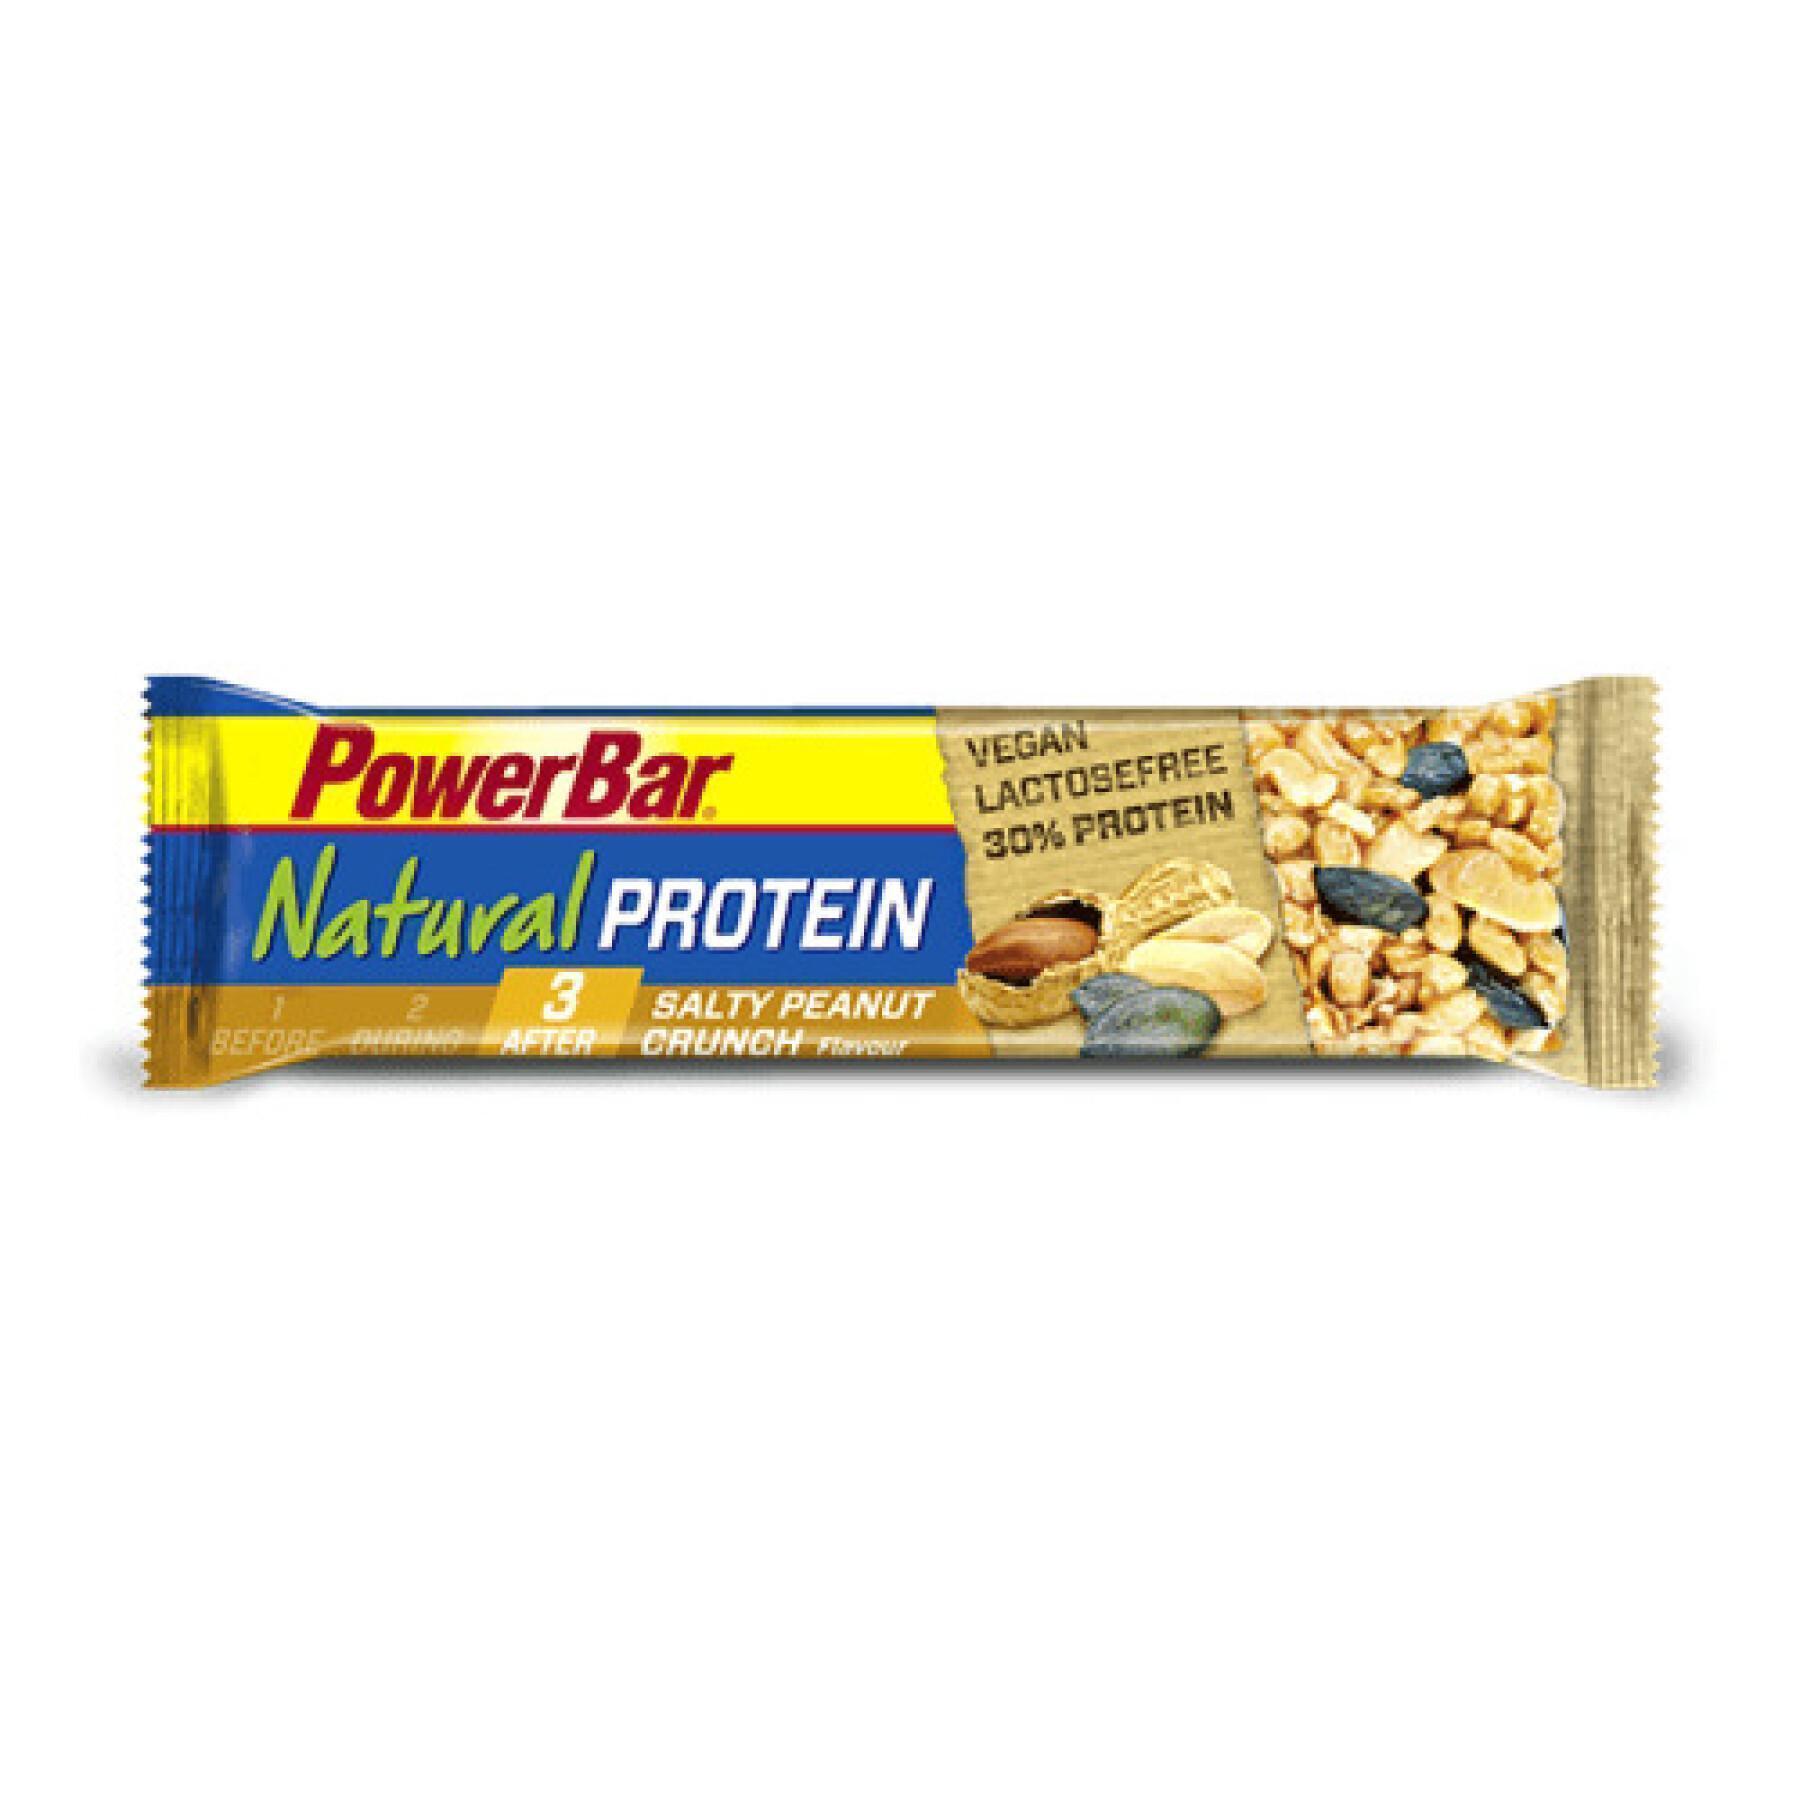 Partij van 24 repen PowerBar Natural Protein Vegan - Salty Peanut Crunch